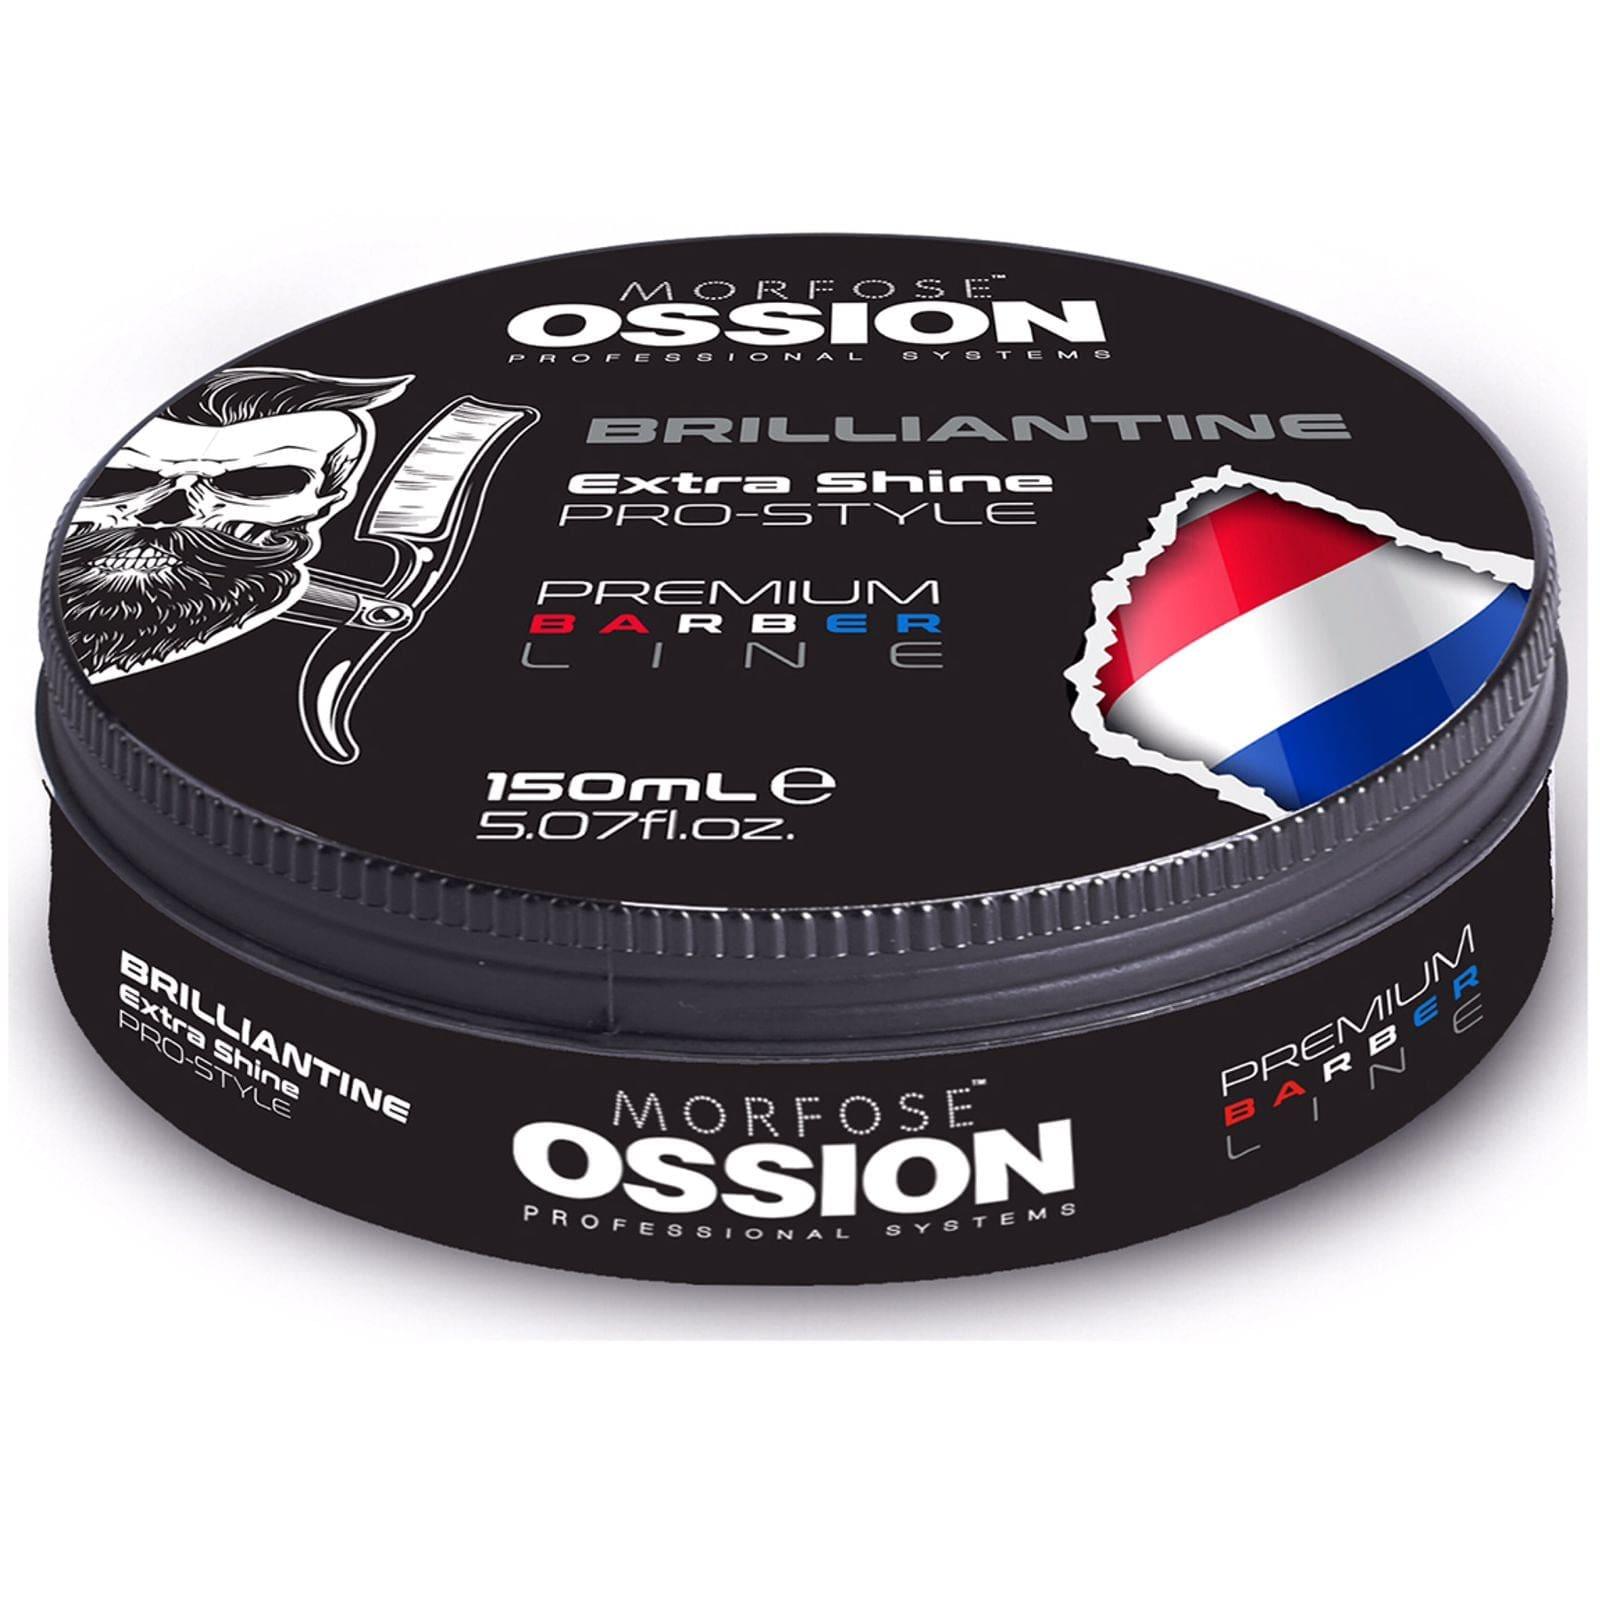 Morfose Ossion Brilliantine Extra Shine Pro-Style 150ml